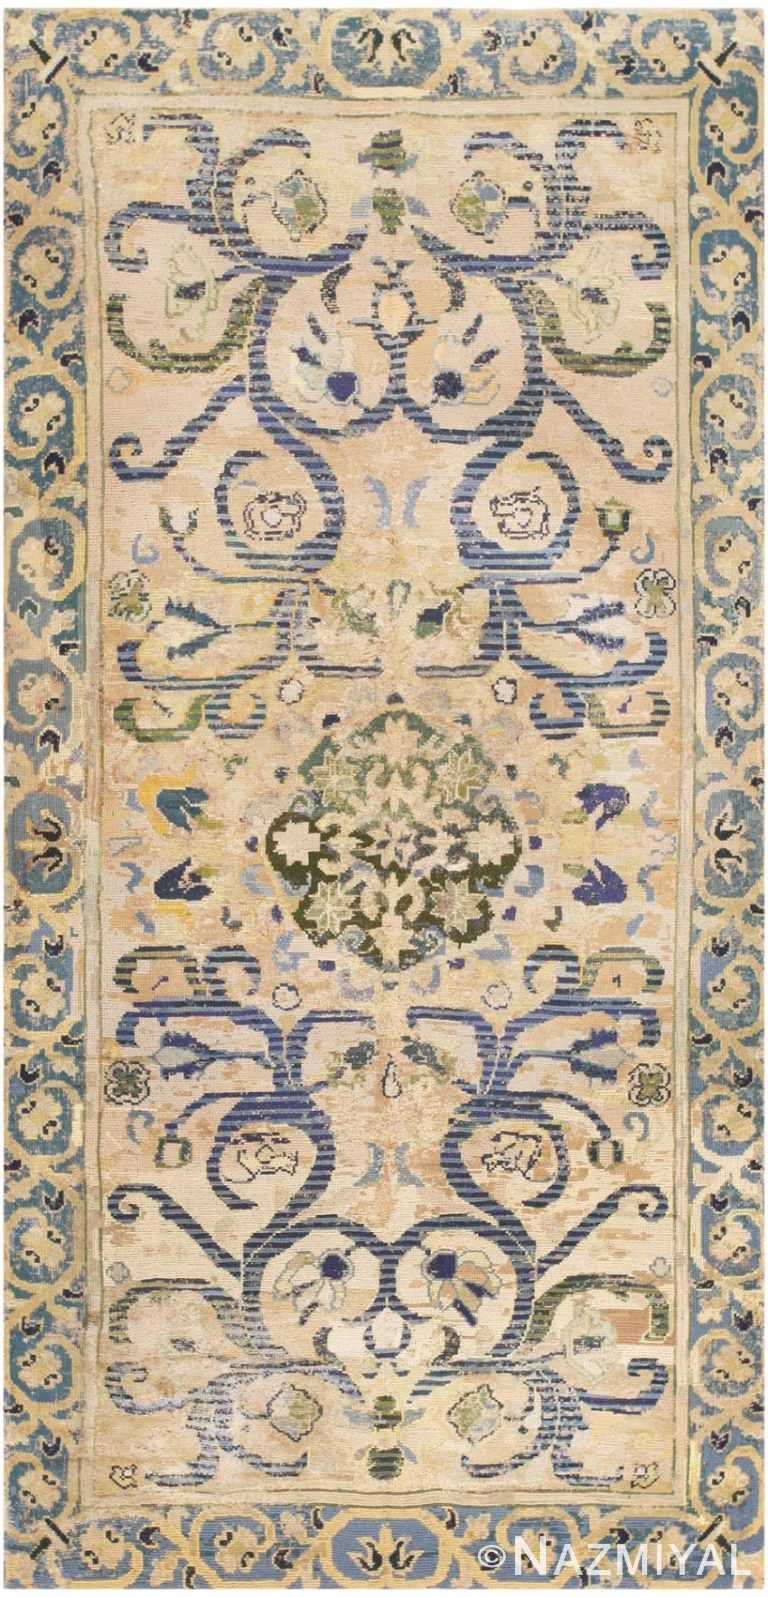 17th Century Spanish Needlepoint Carpet 48028 Nazmiyal